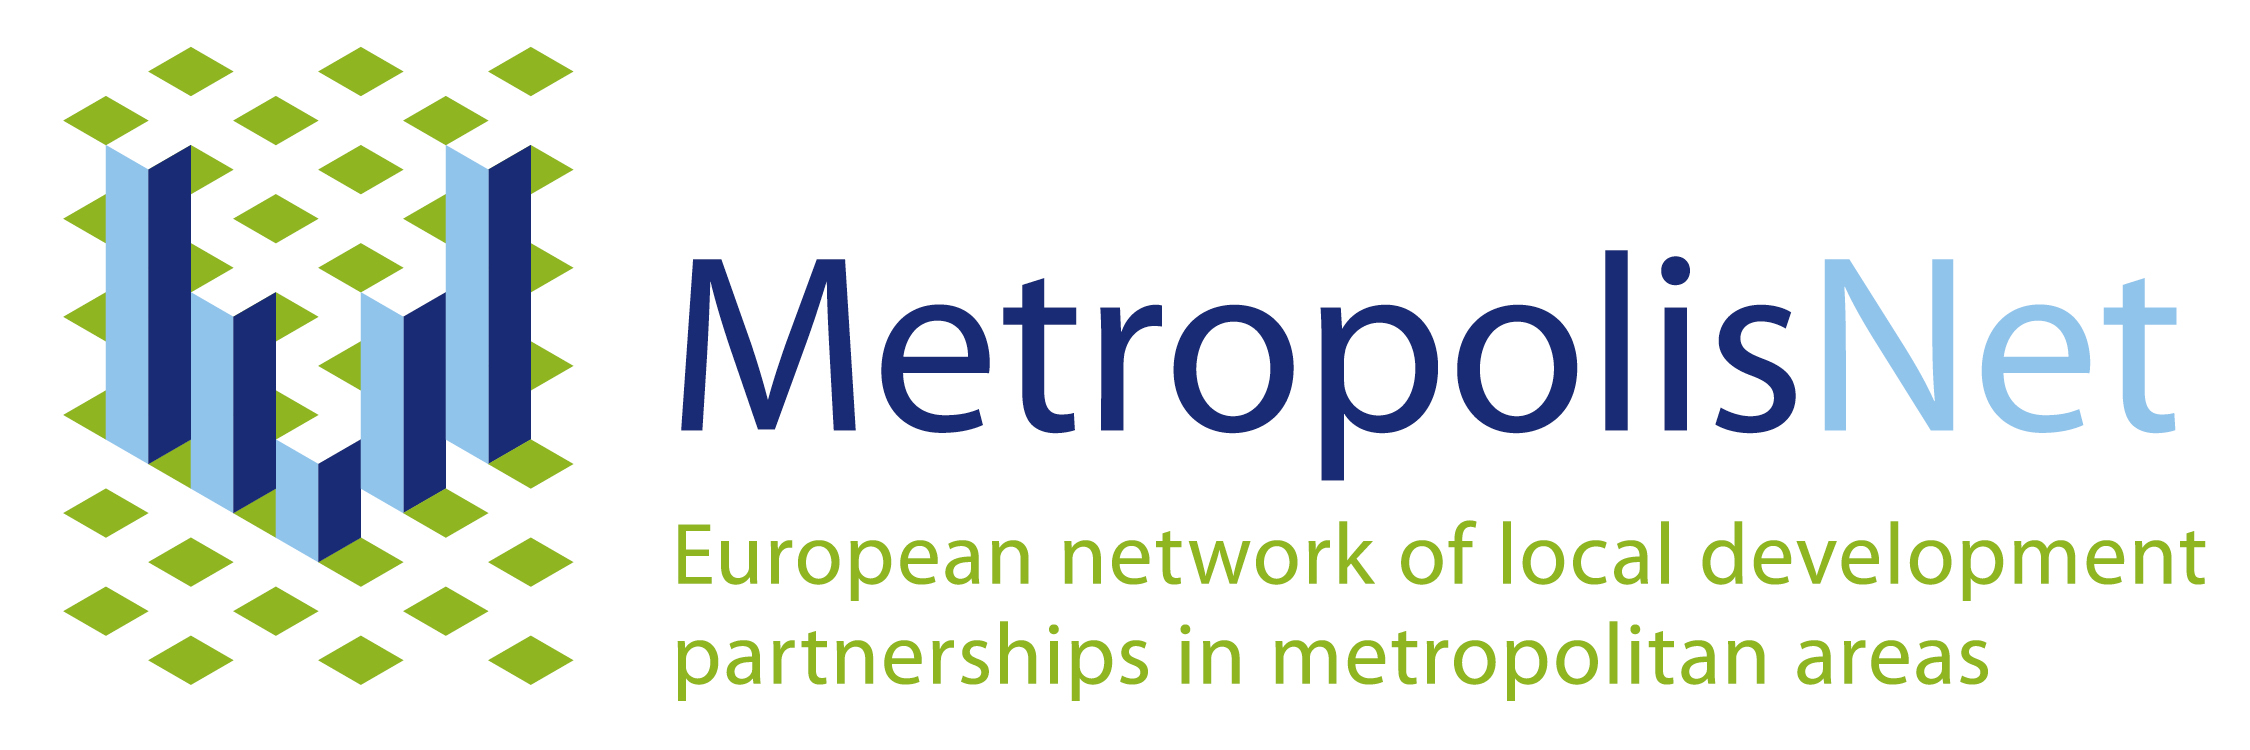 MetropolisNet_Logo_complete_CMYK.png